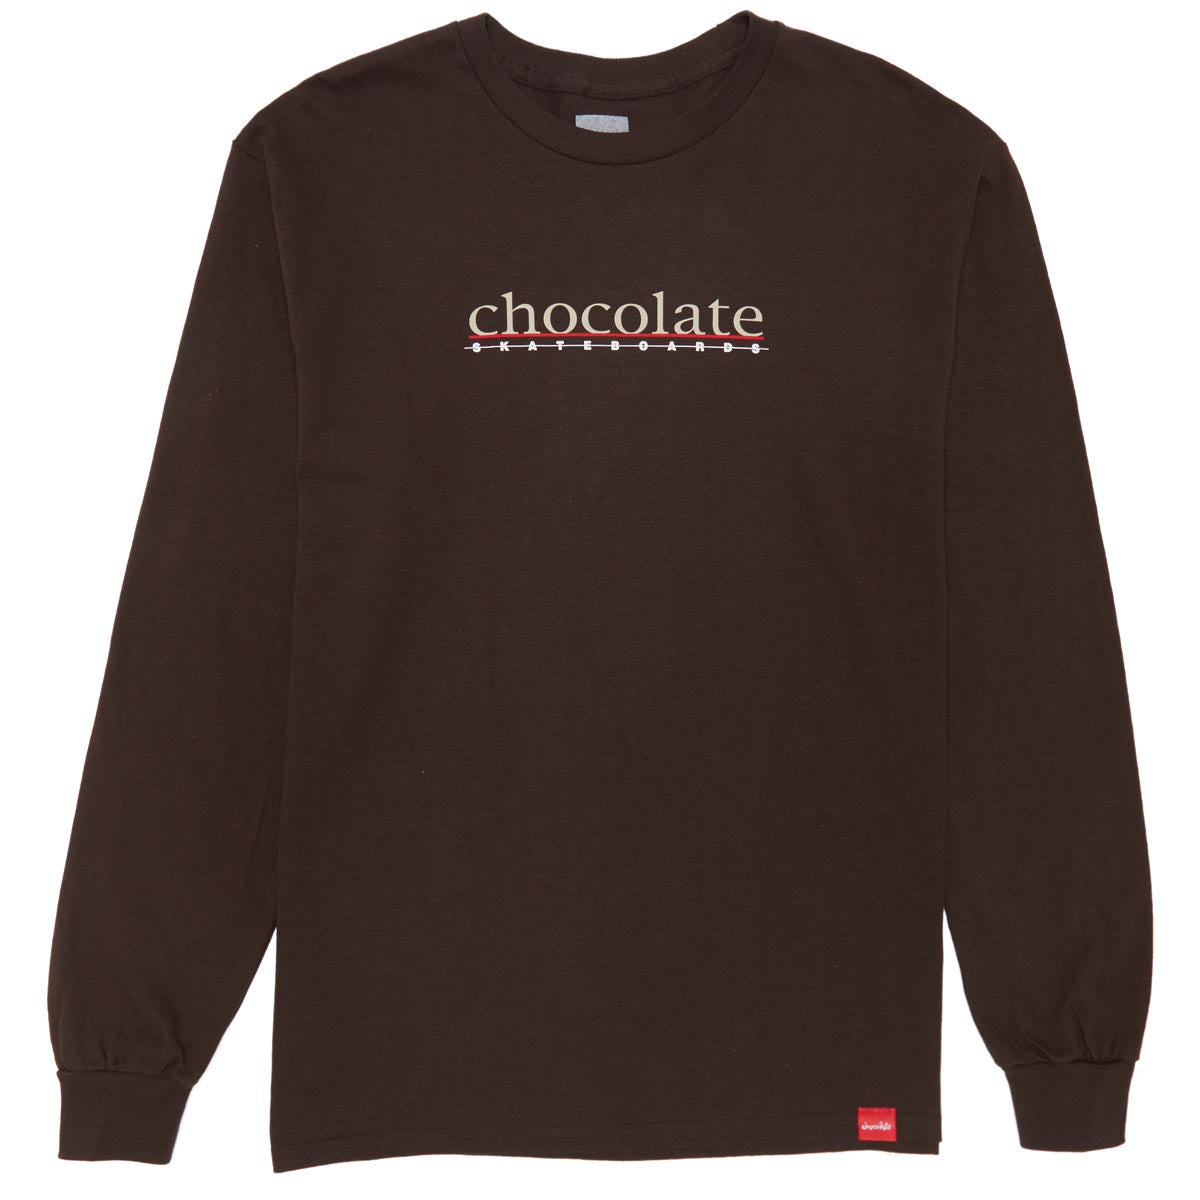 Chocolate Bar Long Sleeve T-Shirt - Brown image 1